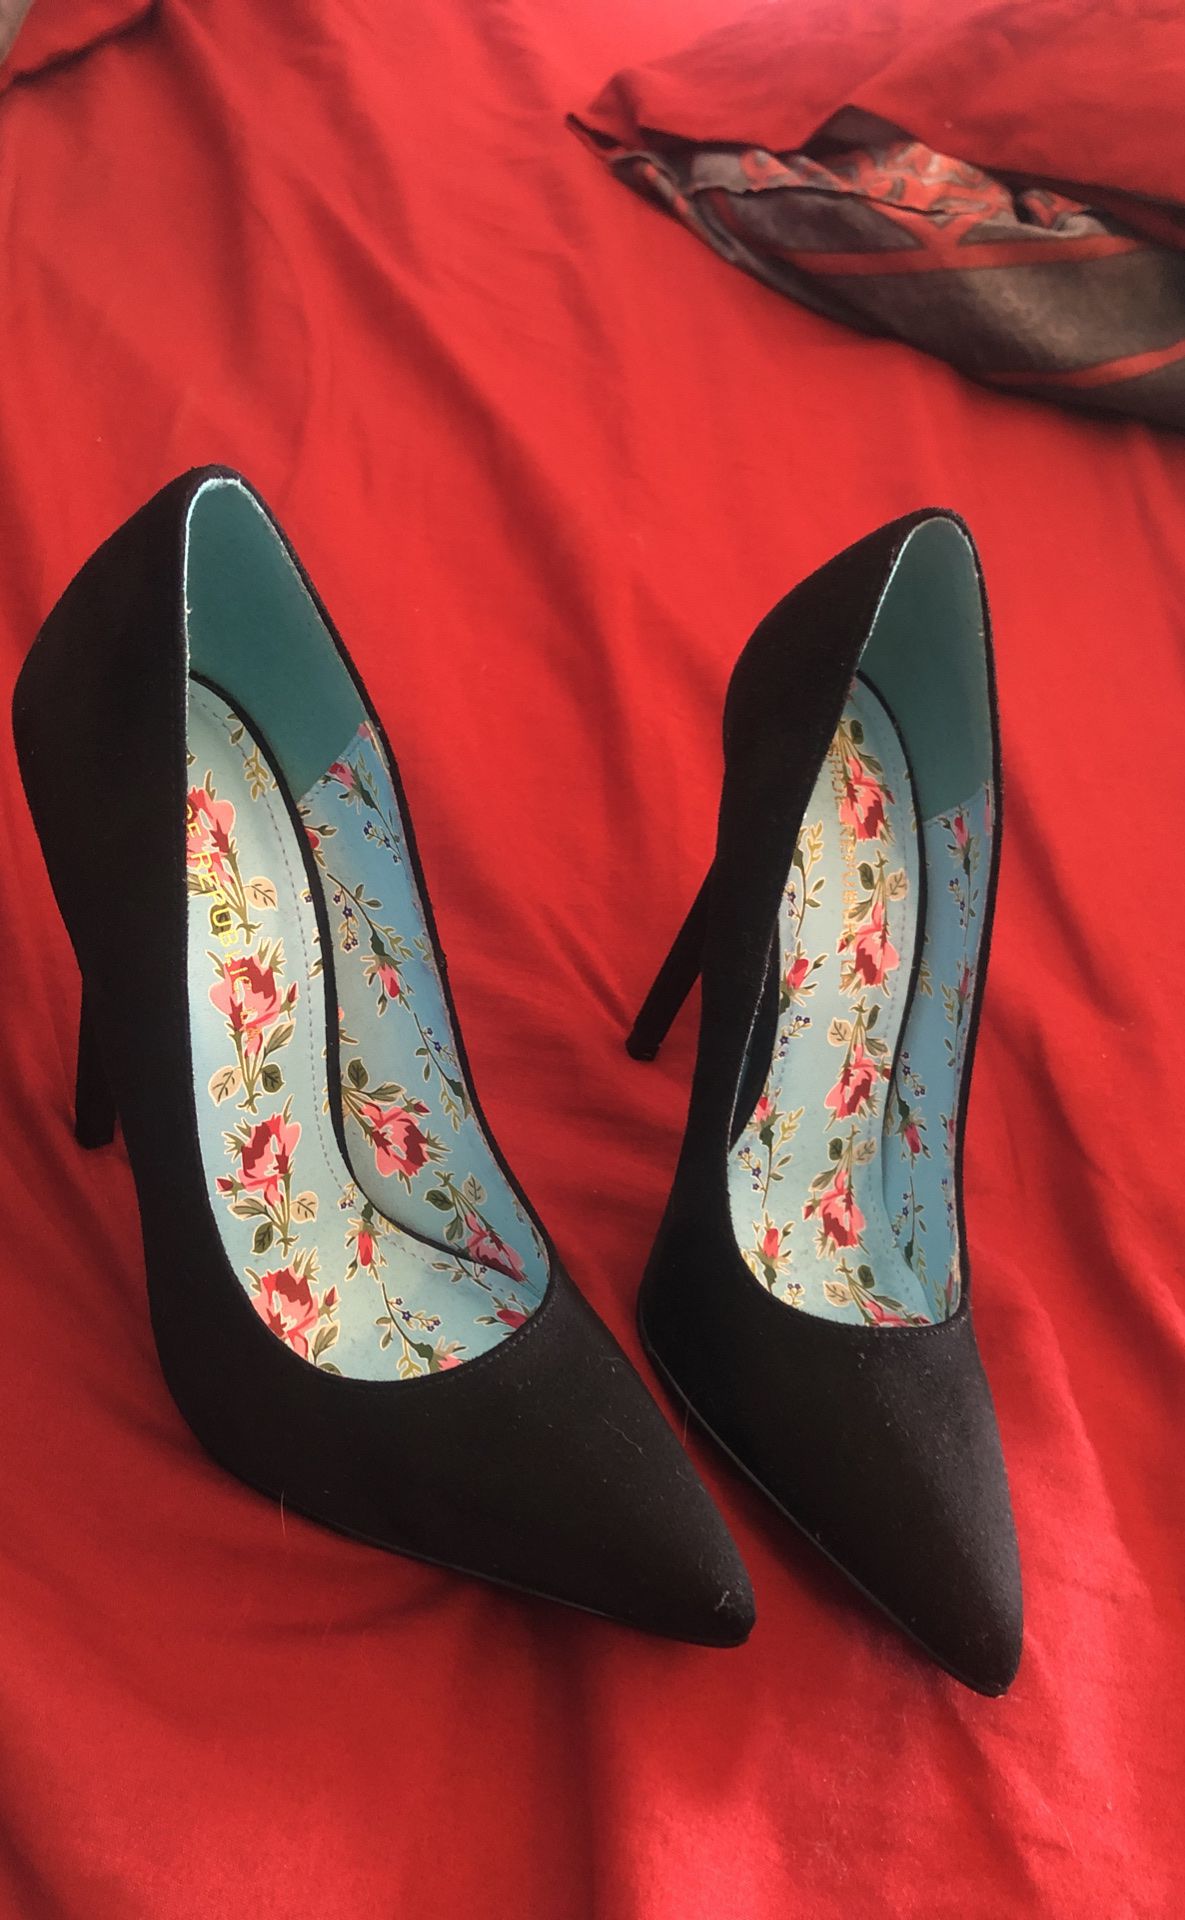 $15 Black heels! Size 7 1/2